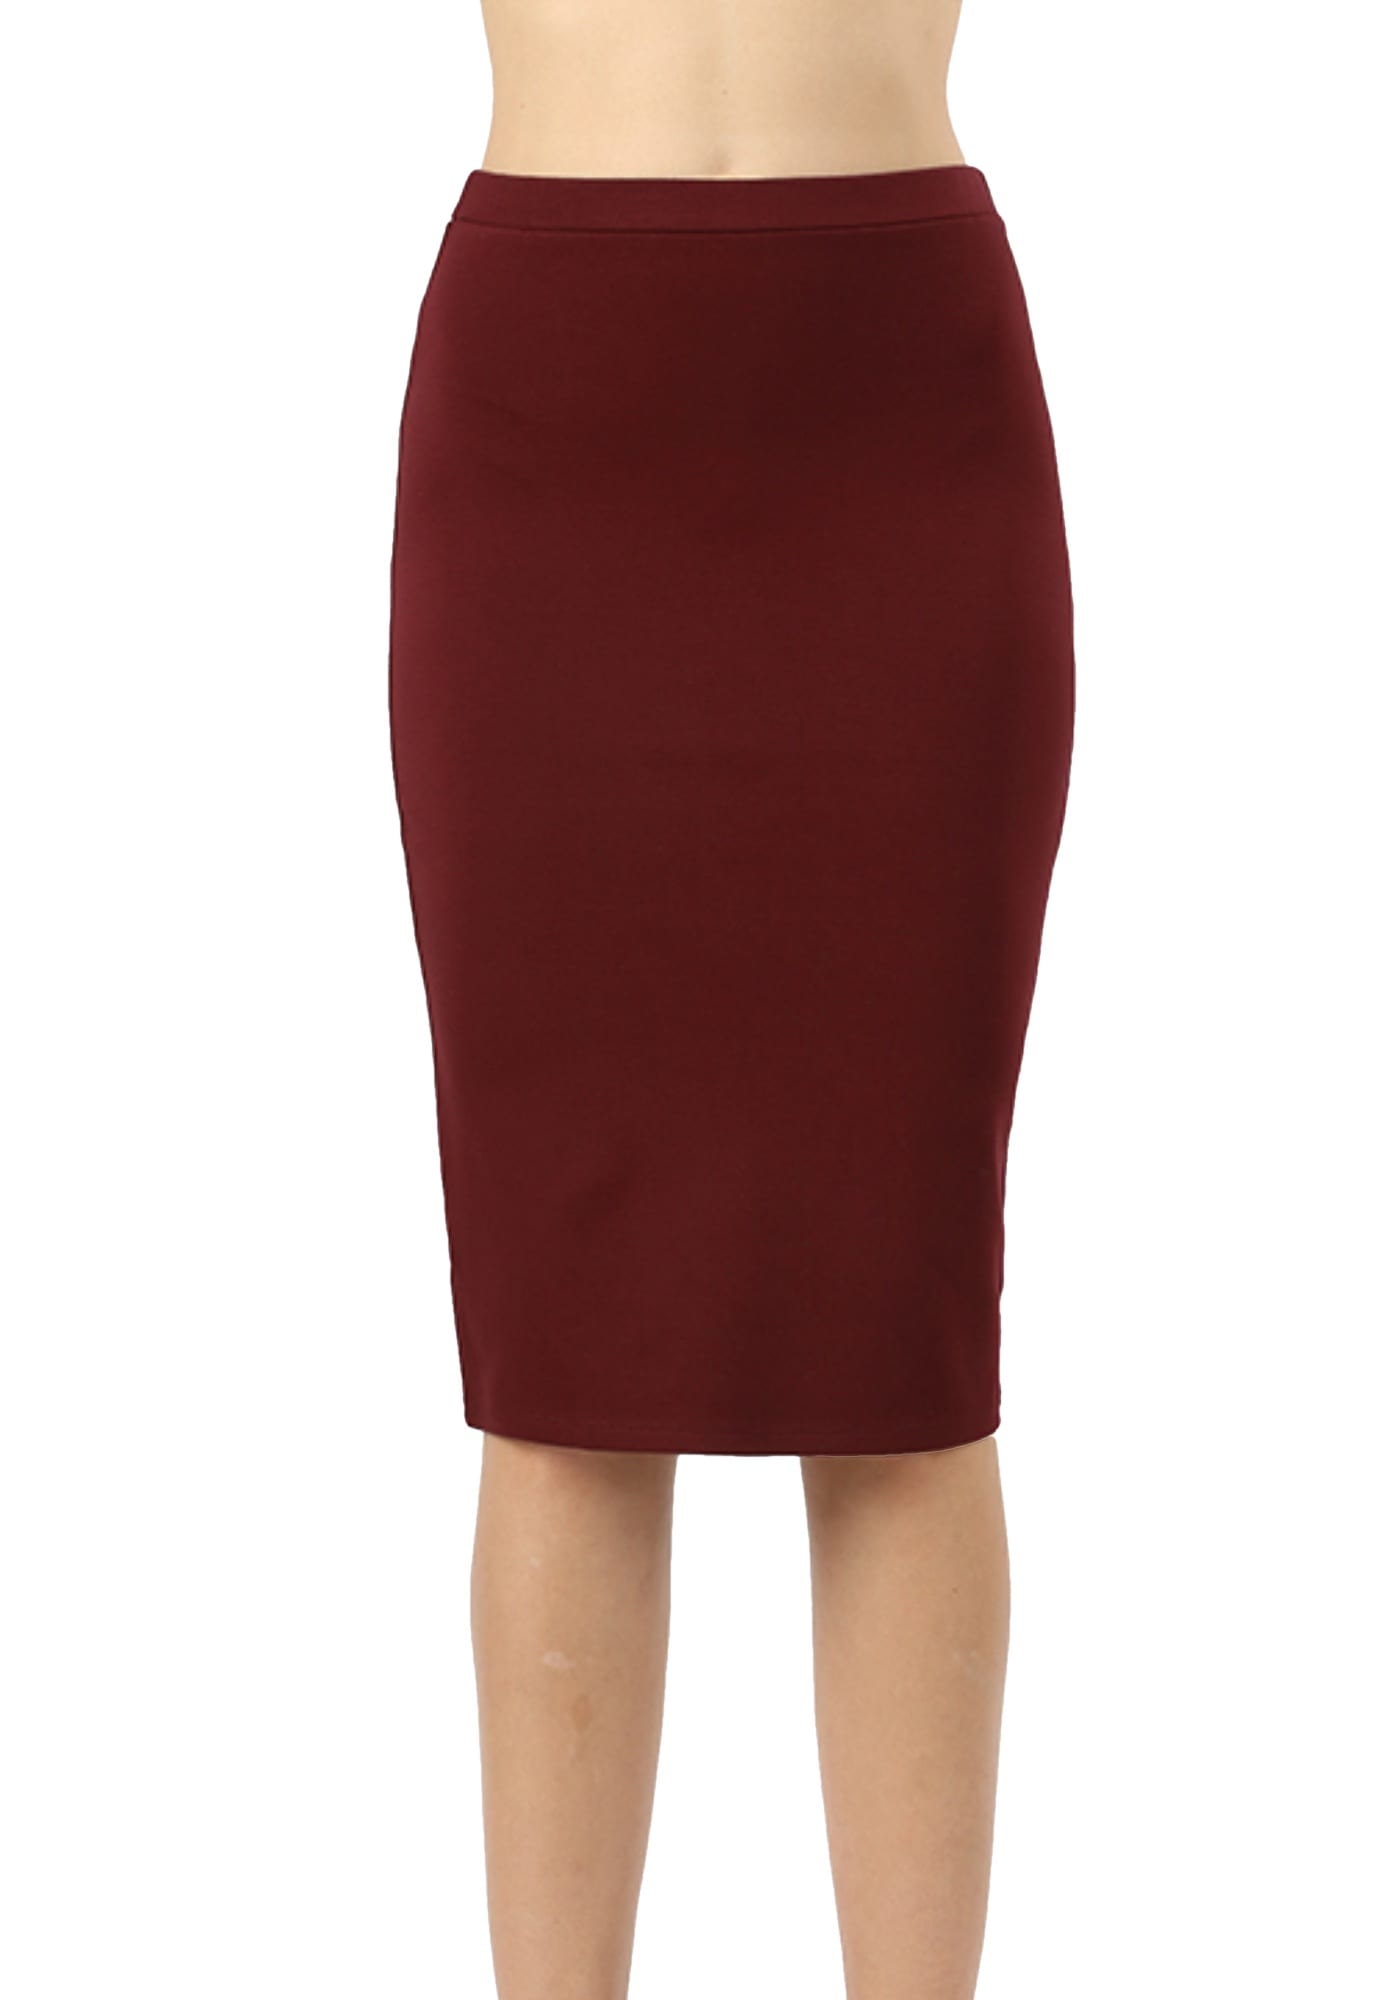 High Waist Knee Length Ponte Basic Skirt (Plus) - $12.99 - KoaJoa.com